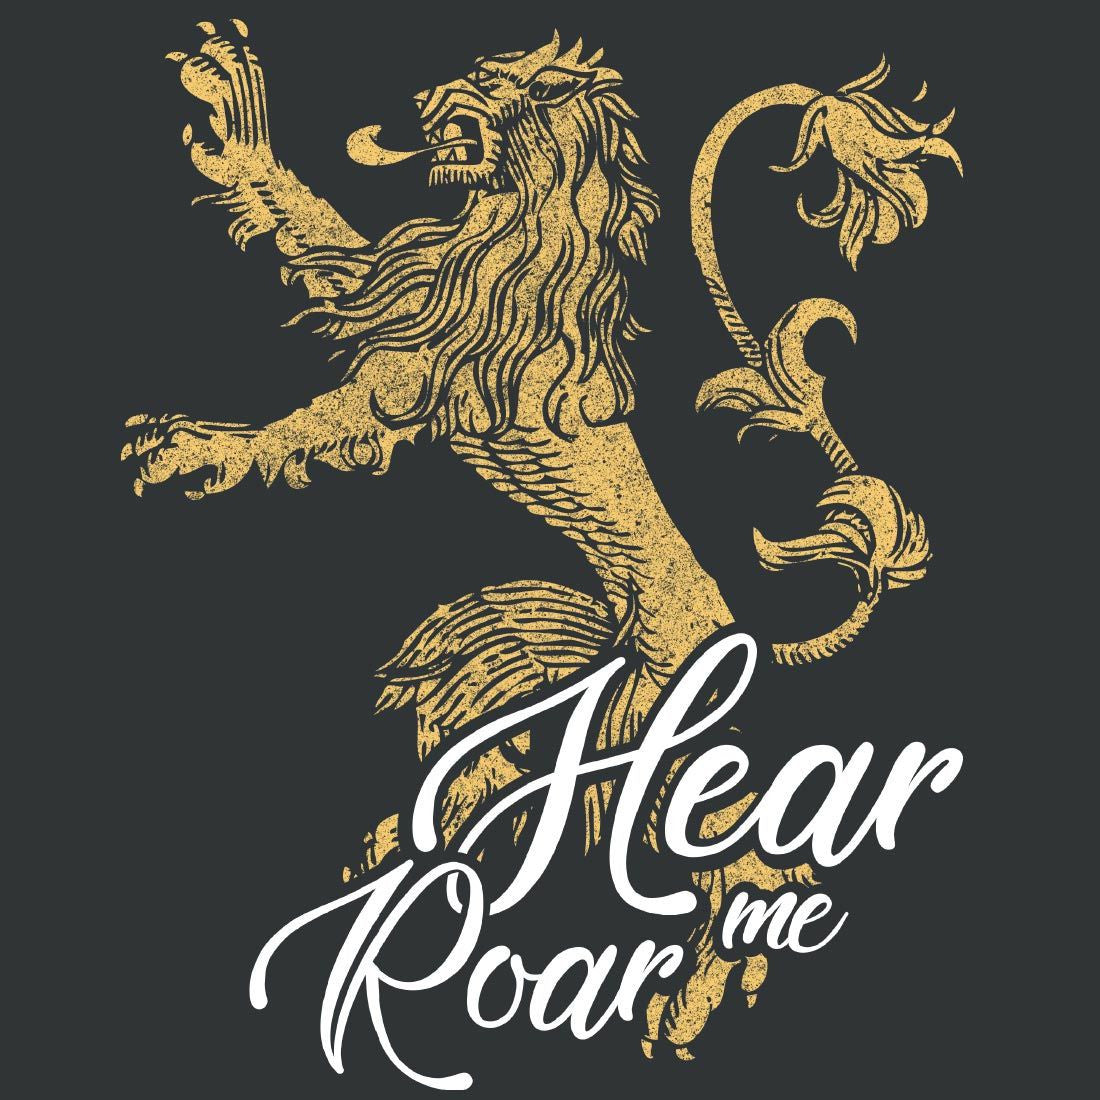 T-shirt Femme Game of Thrones - Lannister Blason